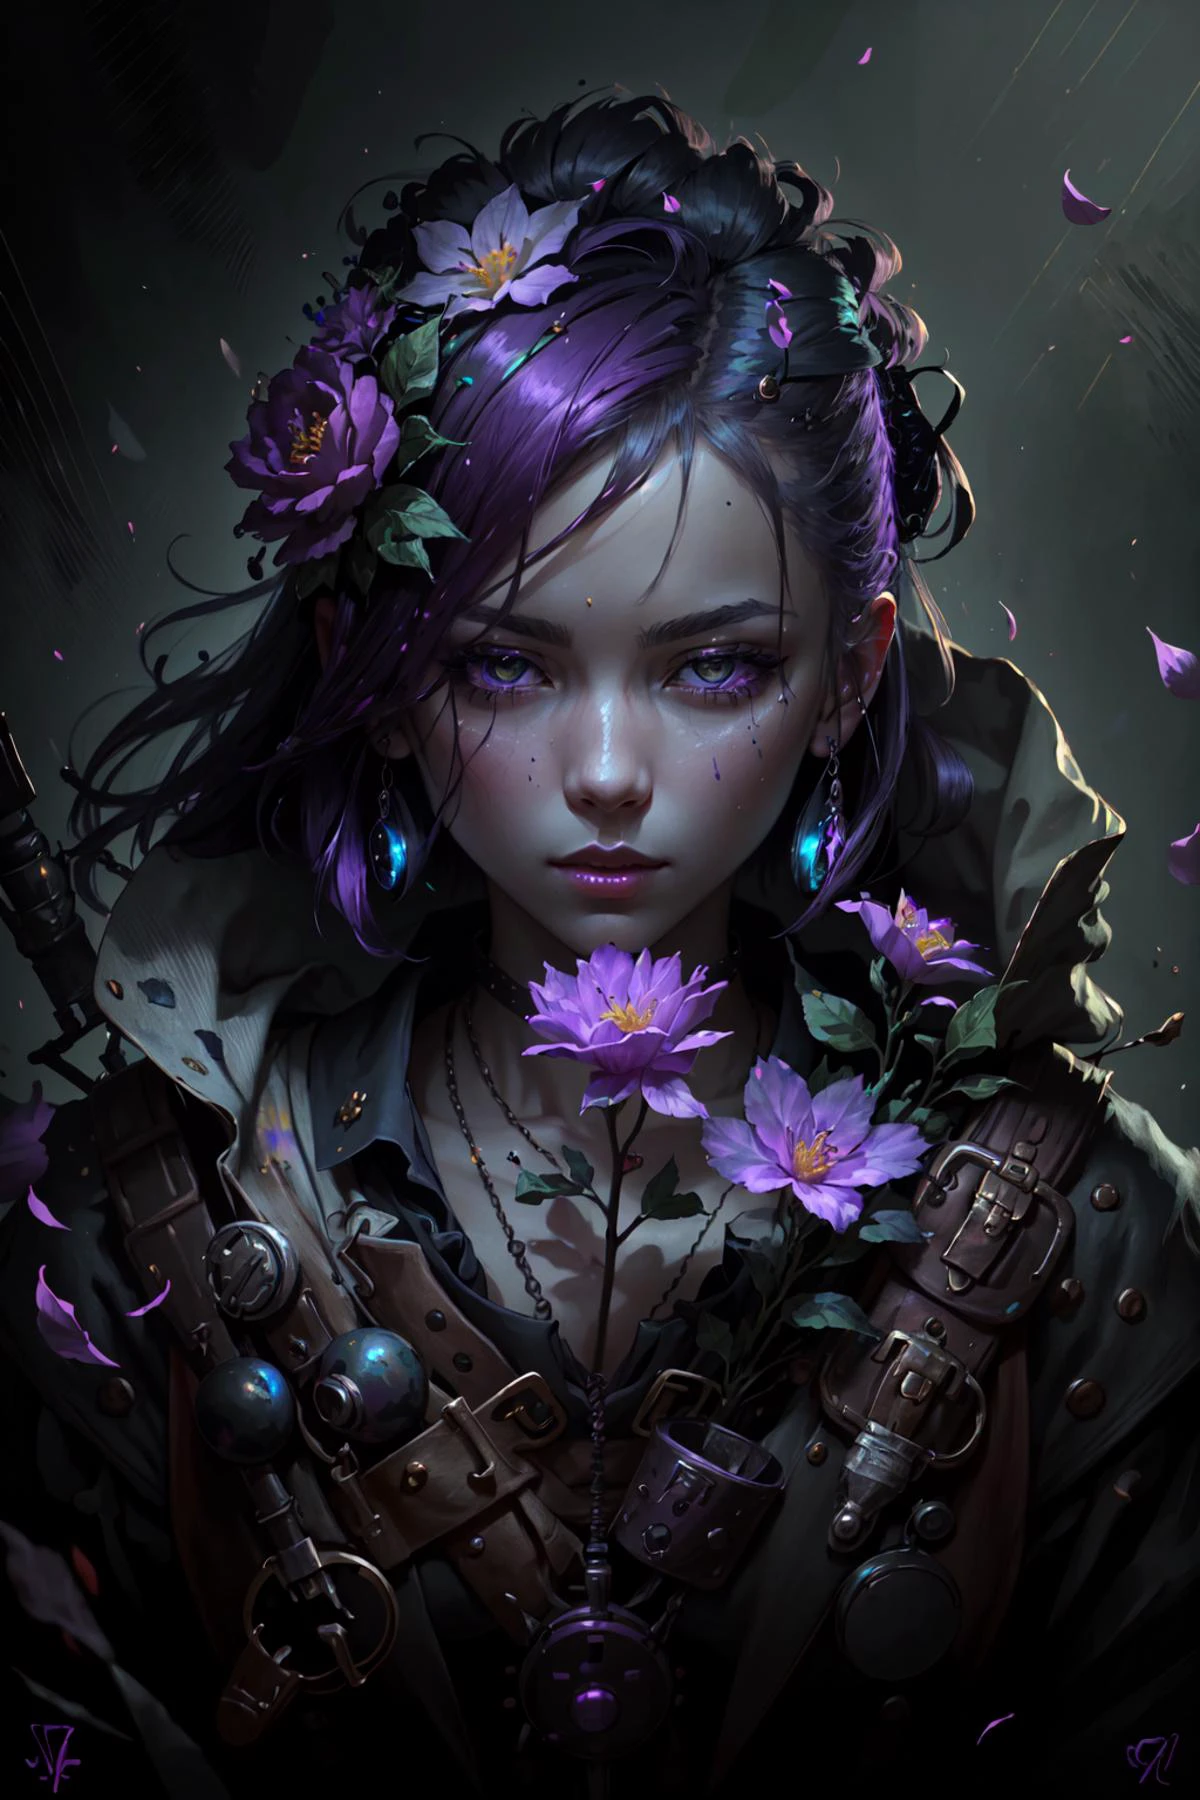 FantasyStyle_Burple, 
1girl, flowers, detailed, realistic, lighting, volumetric lighting, focus, deep purple, colorful, paint, illustration, masterpiece
PunkAI